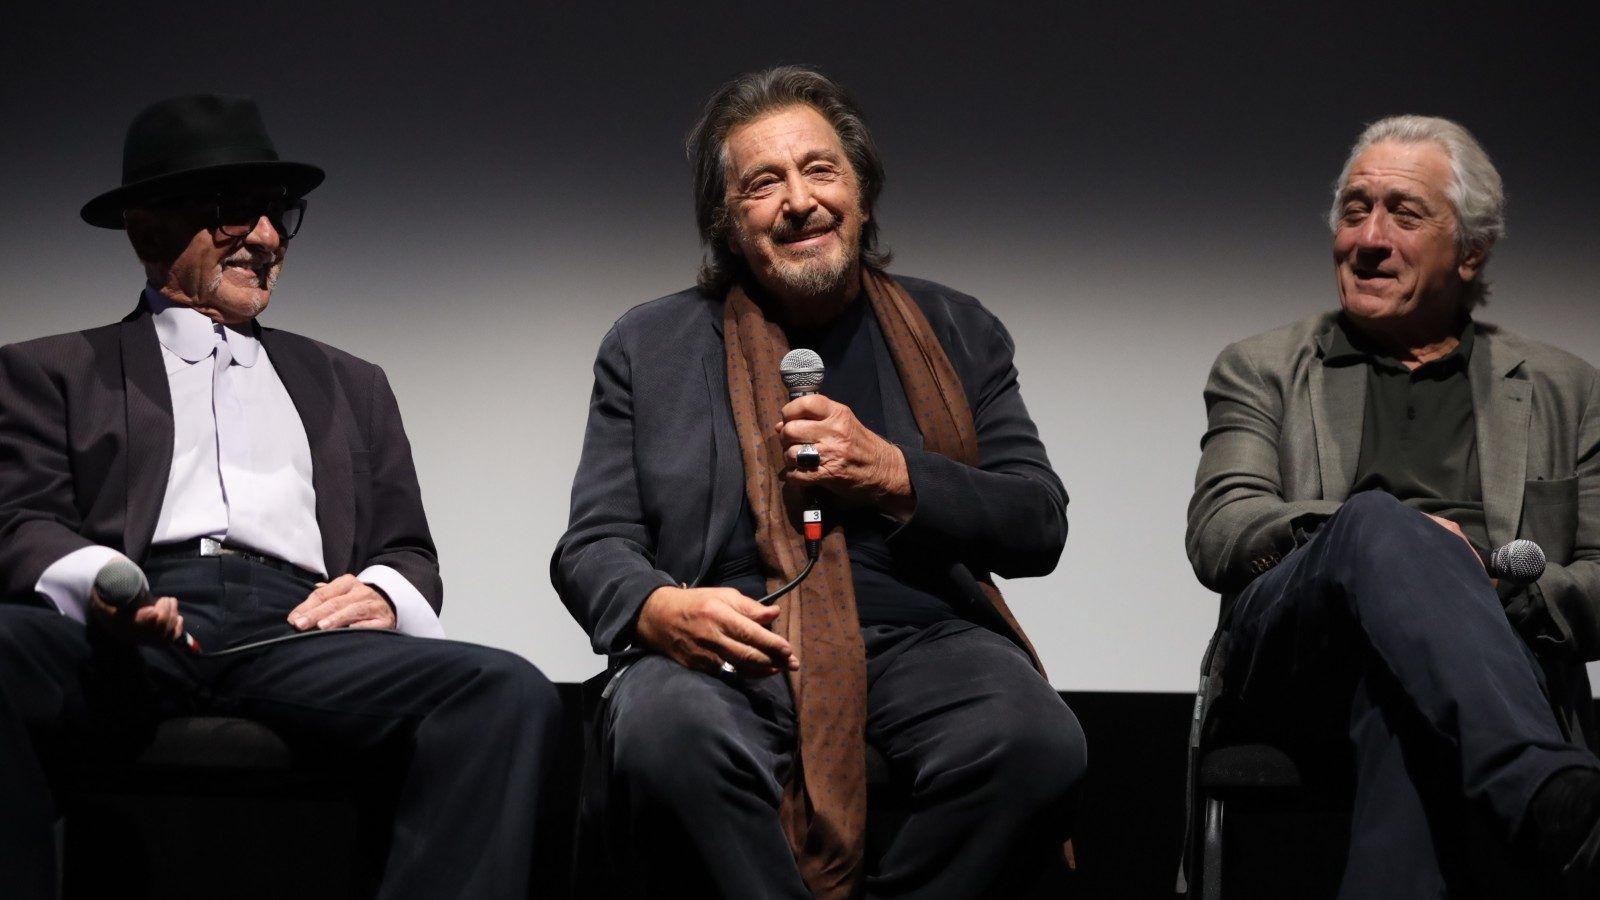 Martin Scorsese, Robert De Niro, Al Pacino, and Joe Pesci Discuss